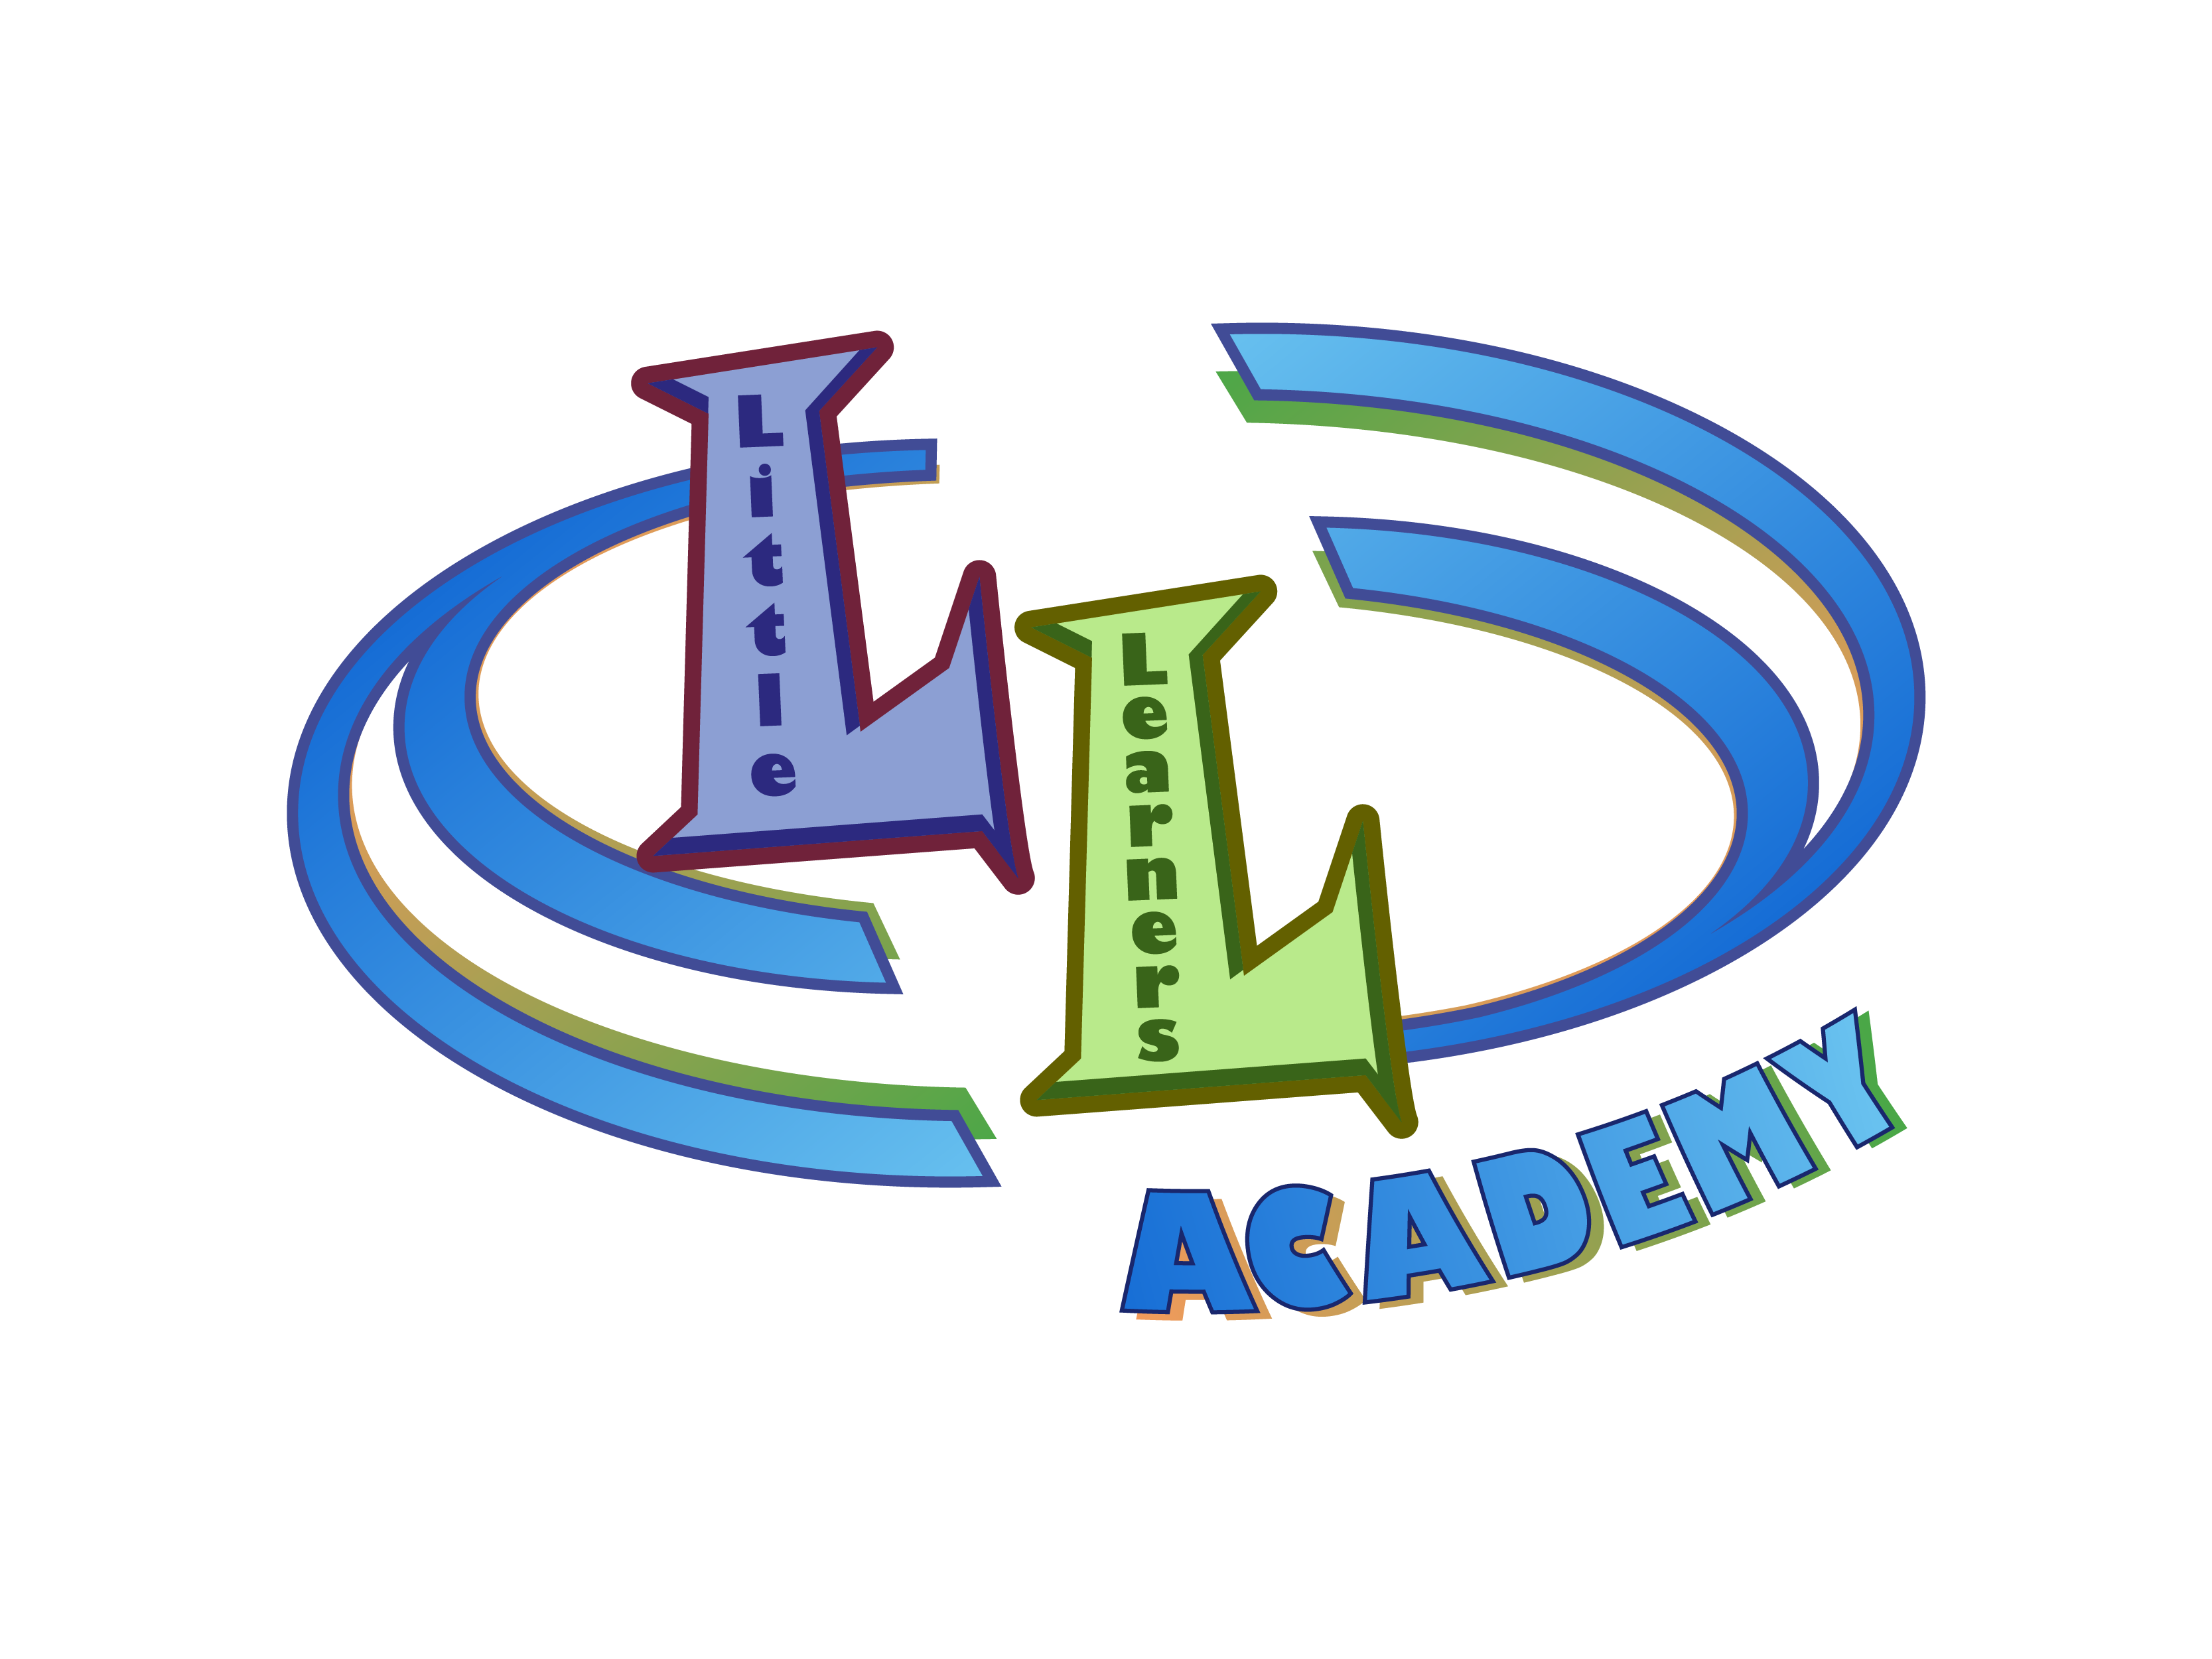 Little Learners Academy